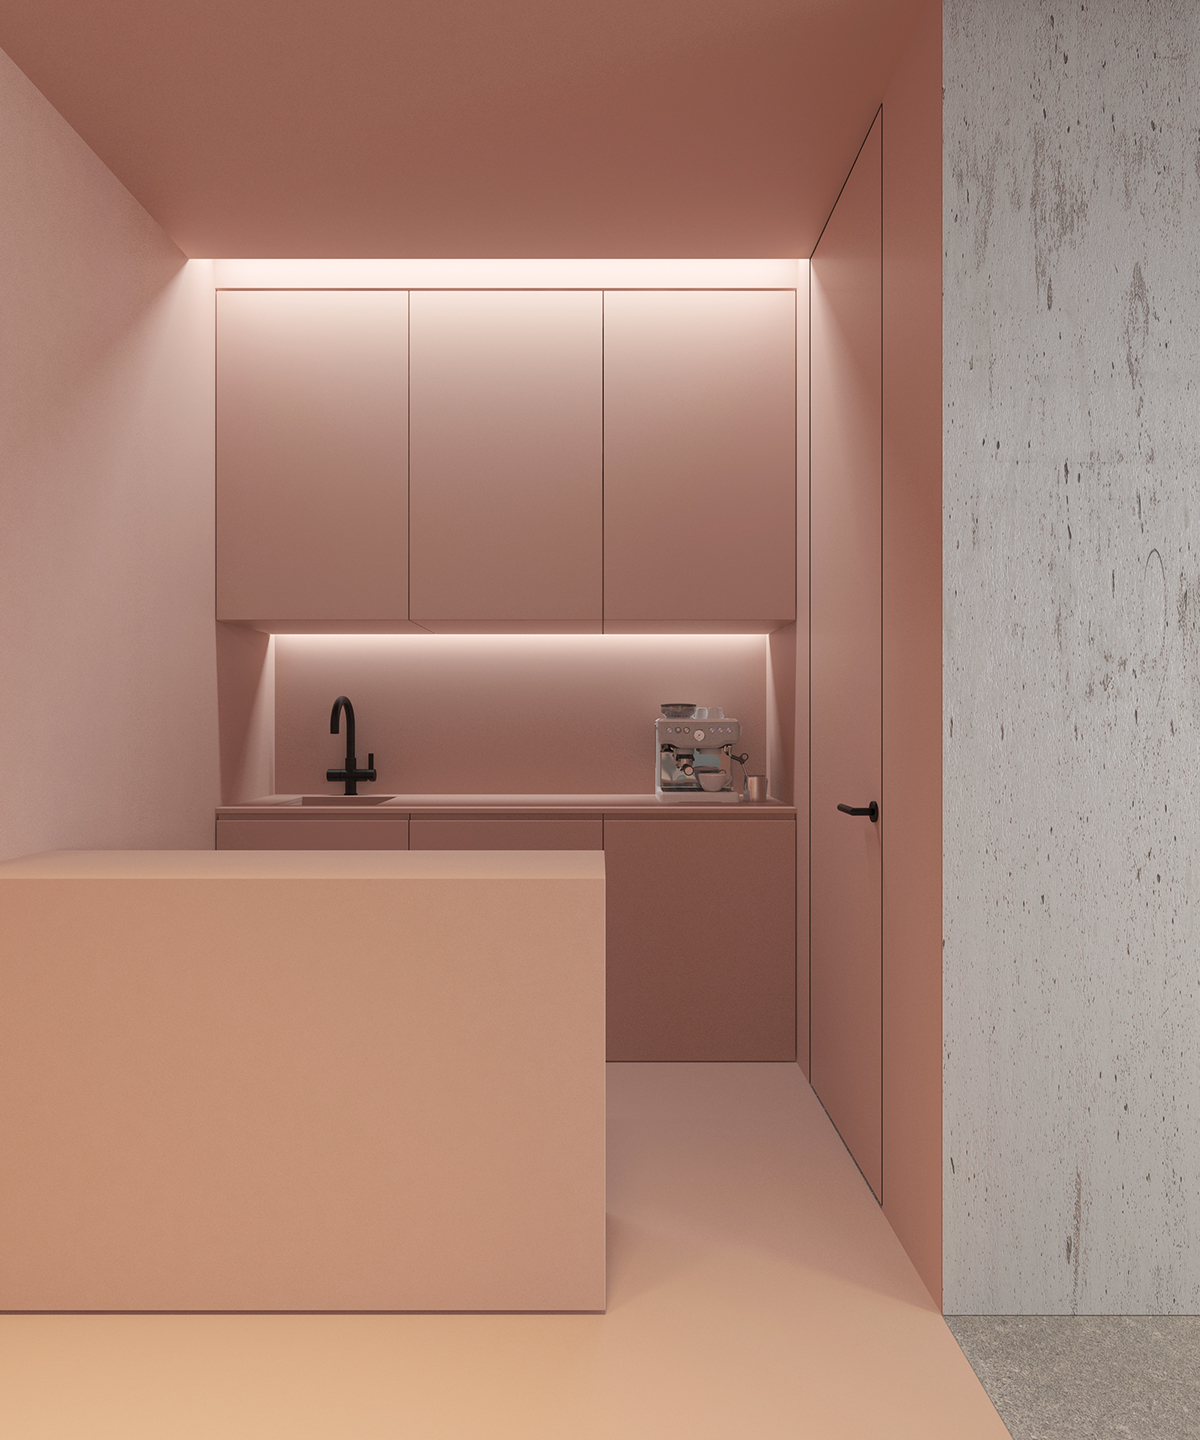 #emildervish officedesign Office pink hay aeronmiller artemide knoll concrete kiev #dtile bathroom dornbracht